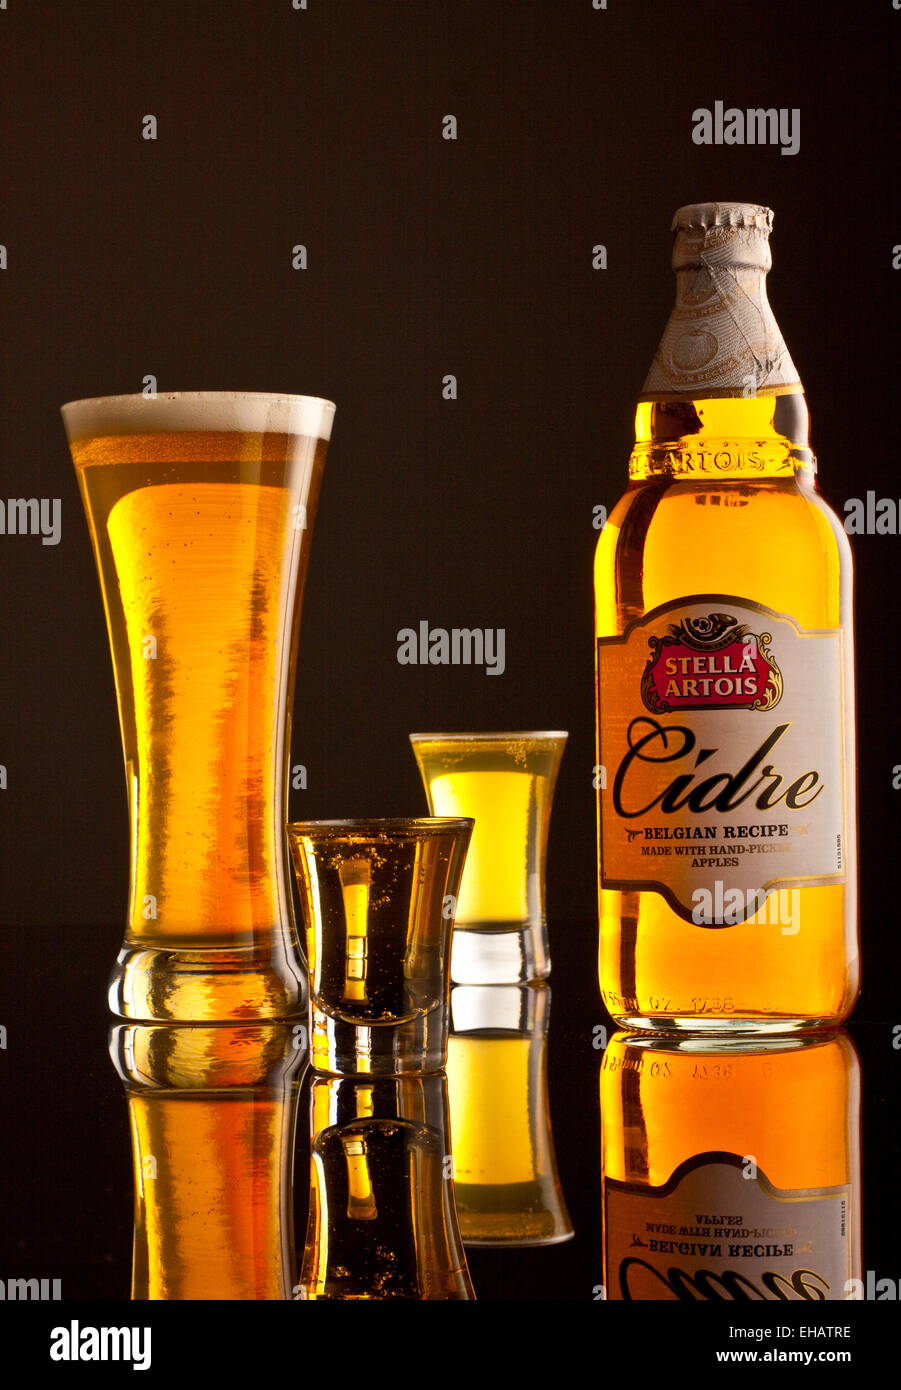 Bottle of Cidre/Cider and Glasses Stock Photo